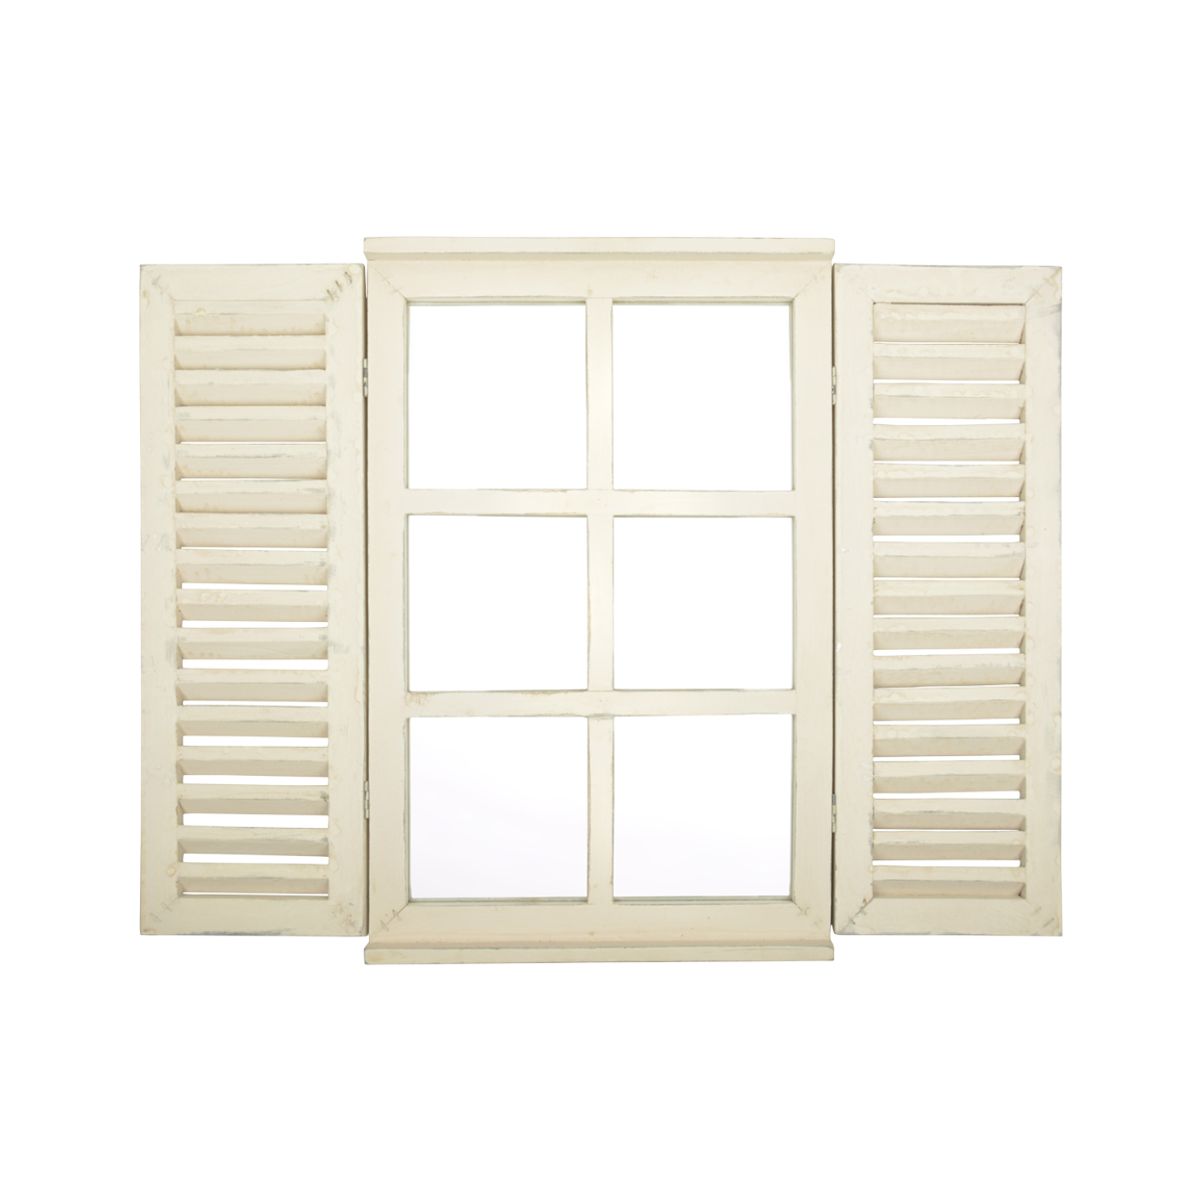 Decoratiuni exterior - Oglinda Window with Doors Esschert Design, hectarul.ro